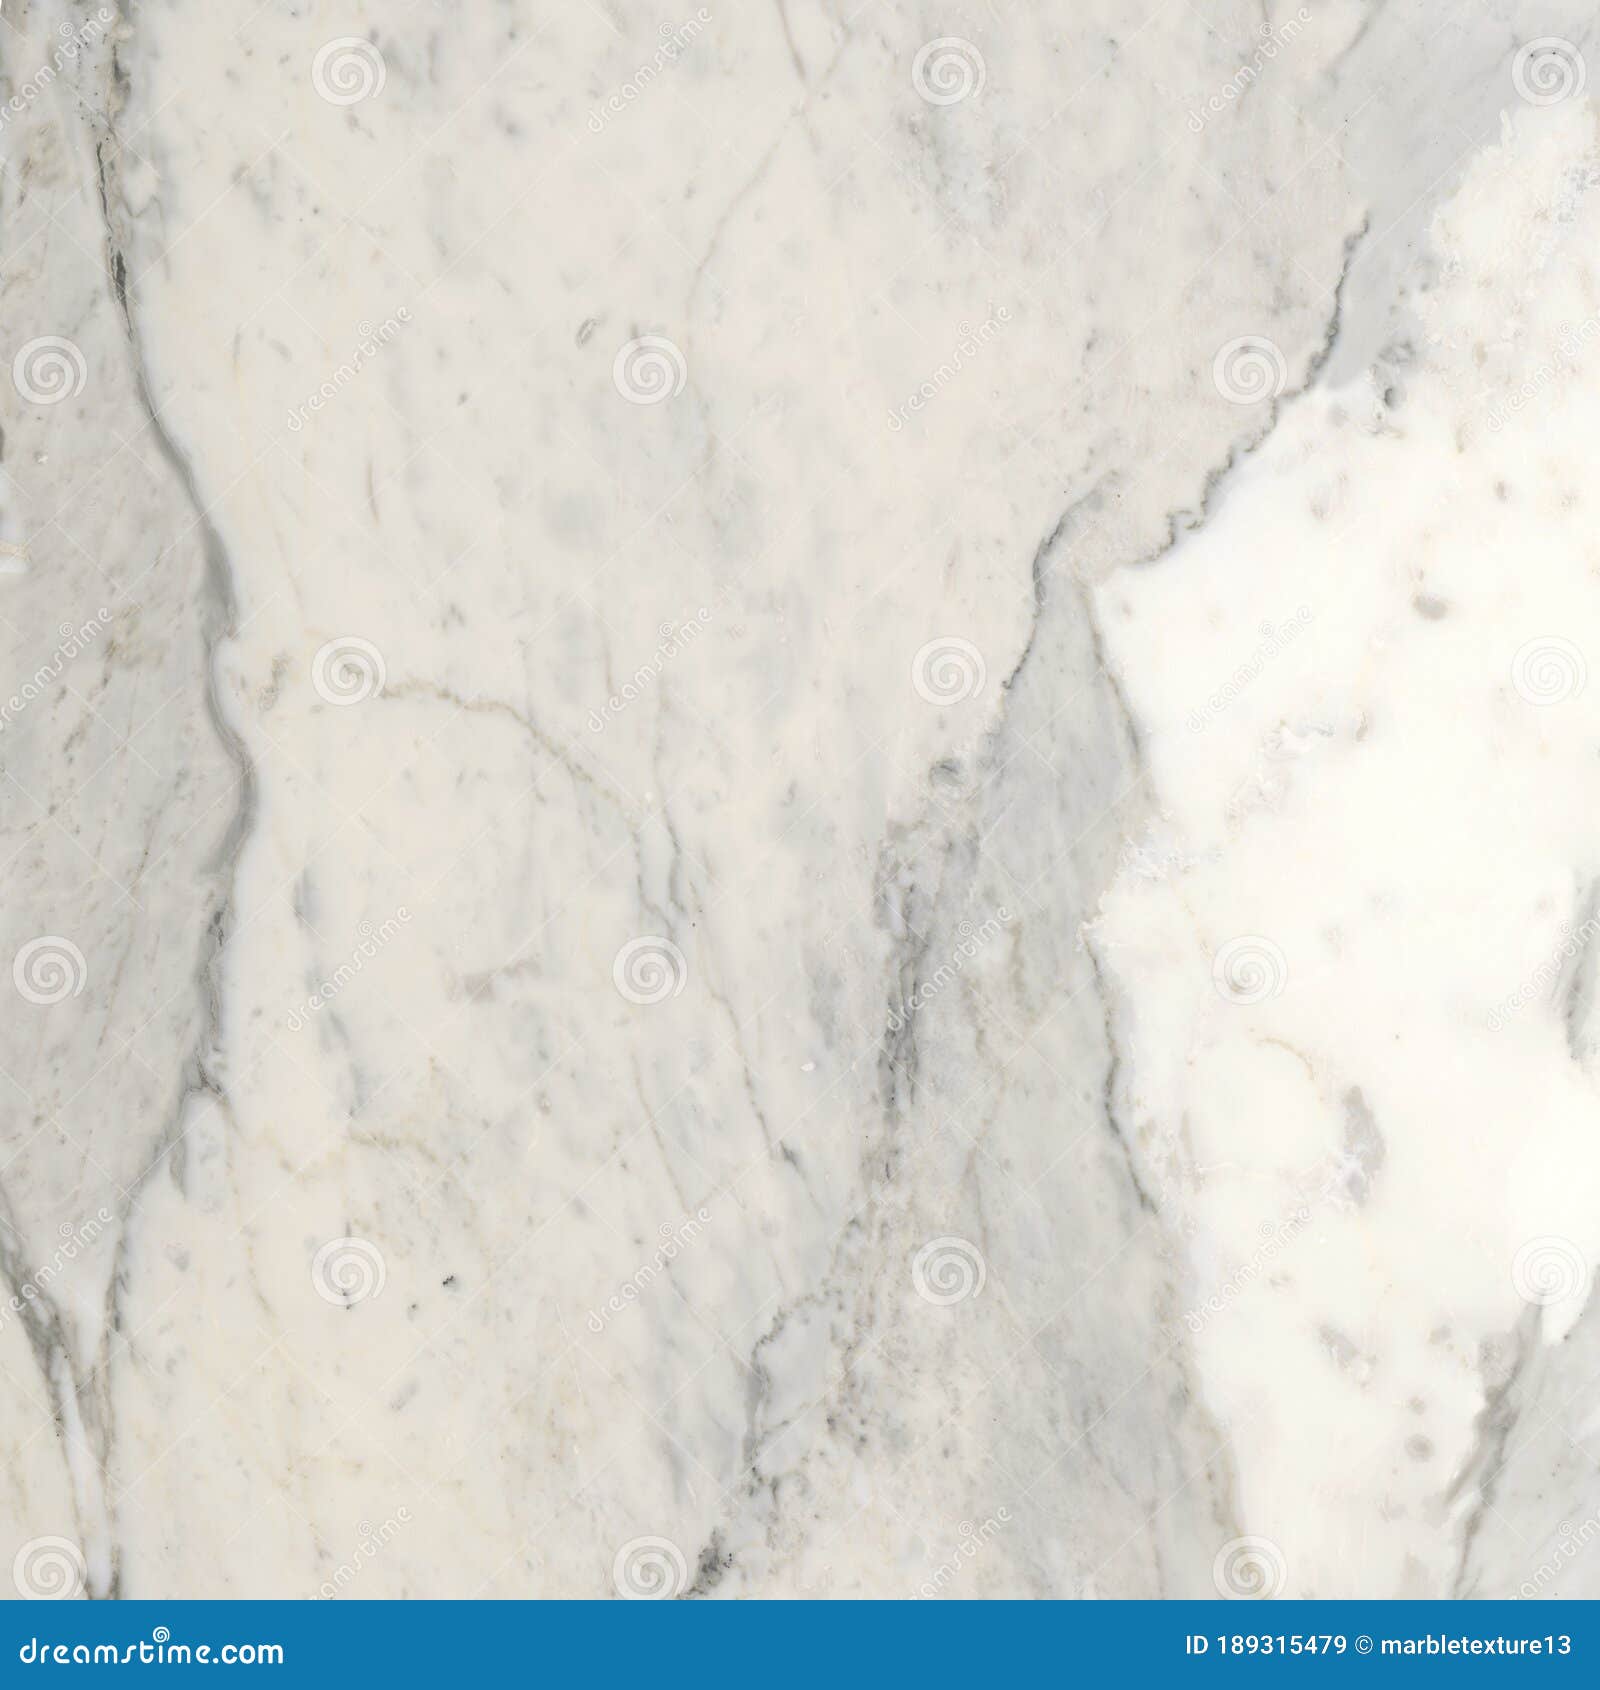 onyx, italain marble, marble background, texture of natural stone,white onyx marble stone background, shell or nacre texture,polis